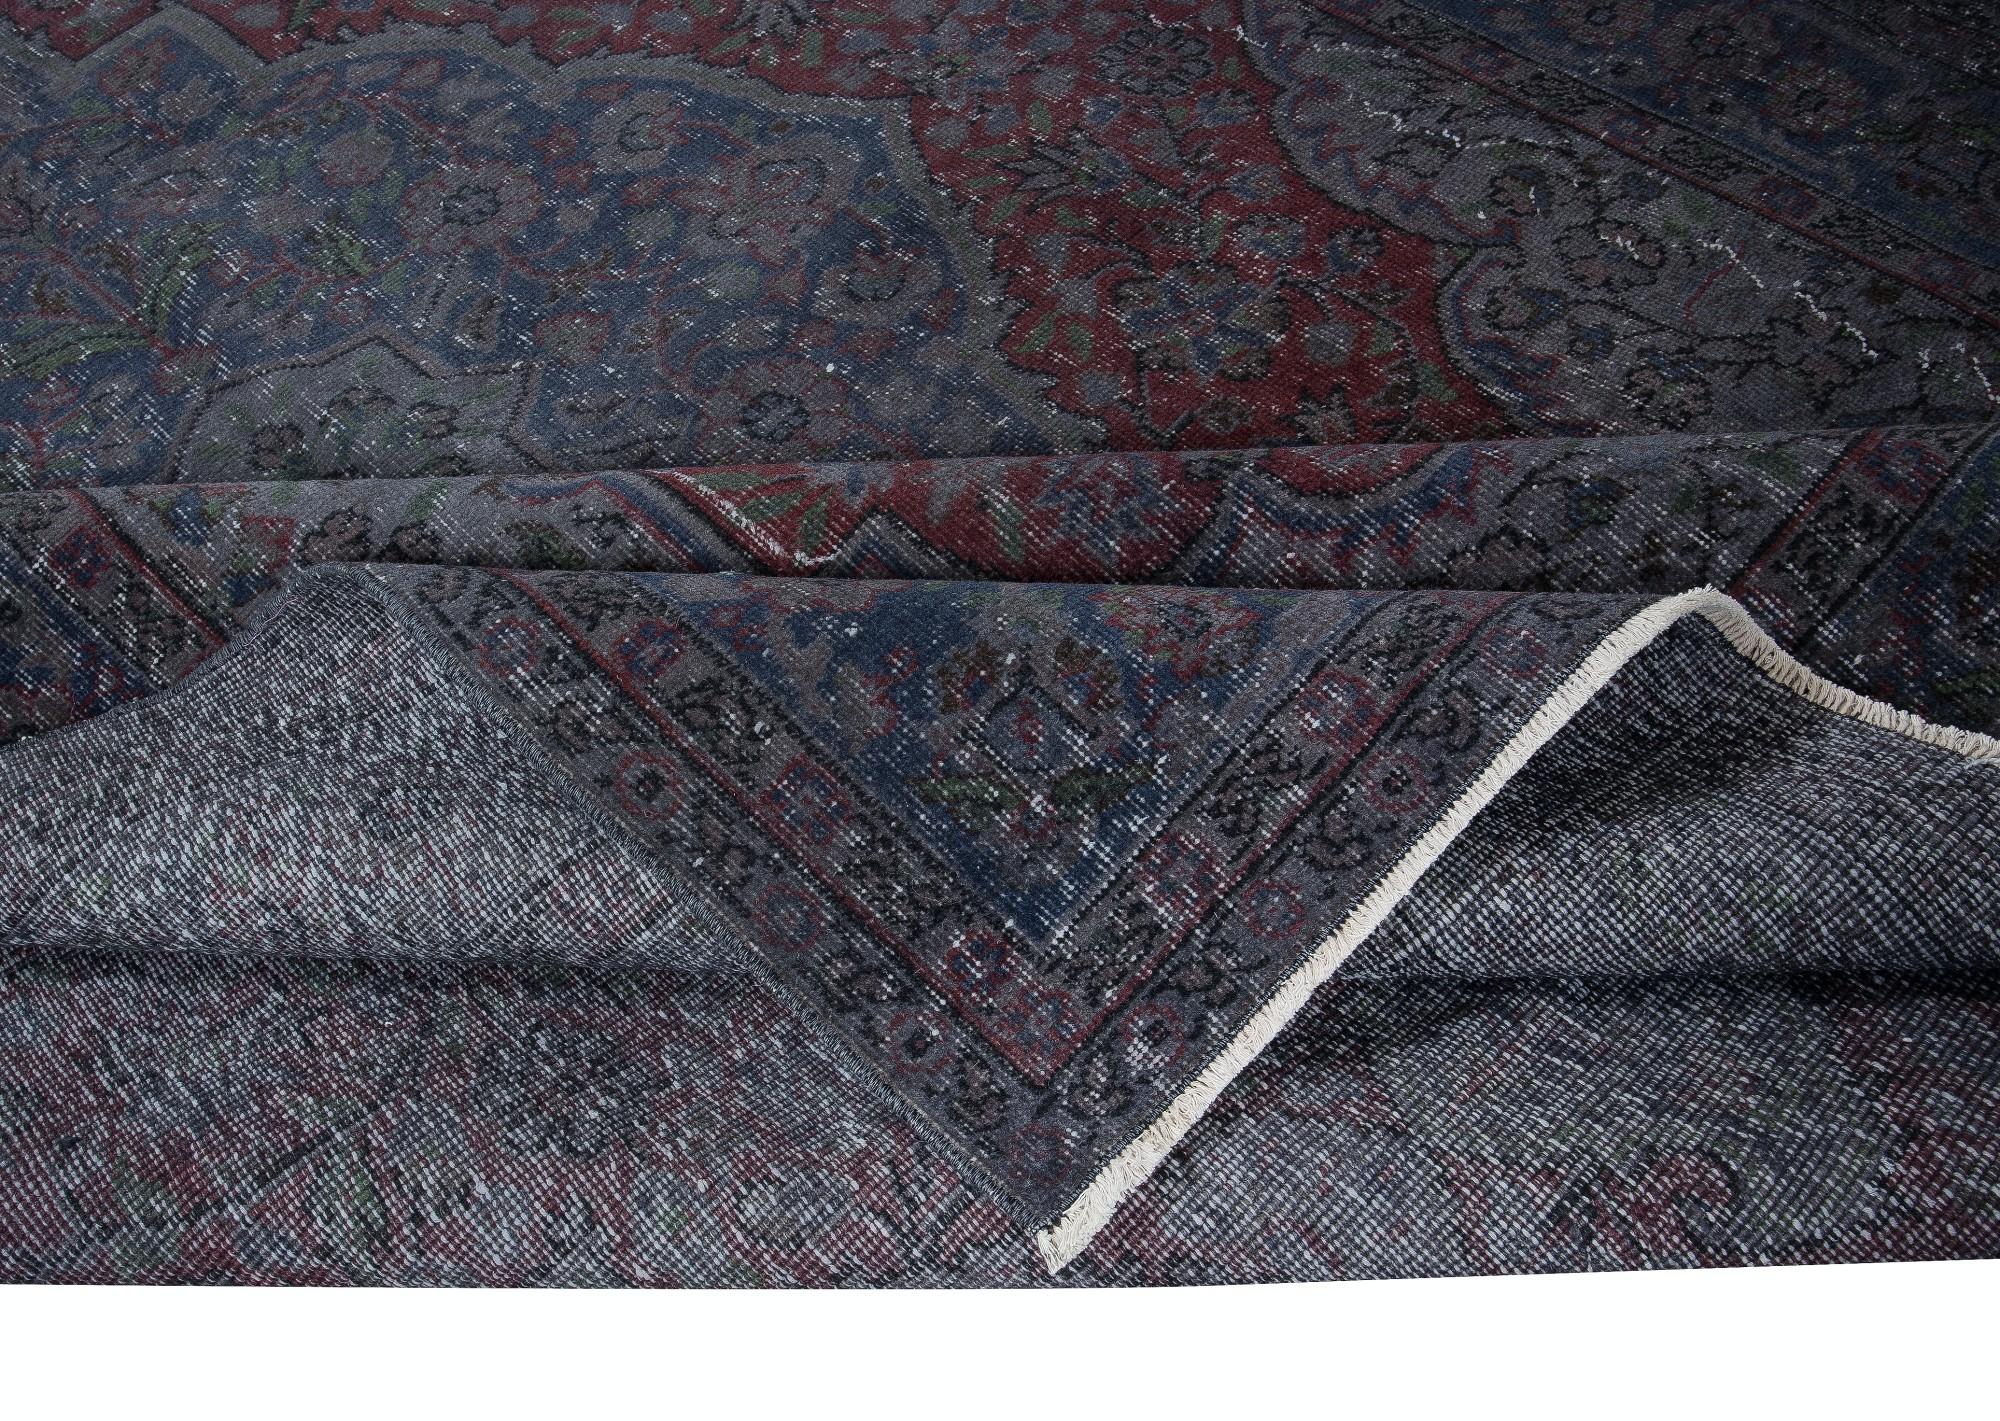 Hand-Woven 6.6x10 Ft Modern Handmade Turkish Area Rug in Gray, Burgundy Red & Dark Blue For Sale